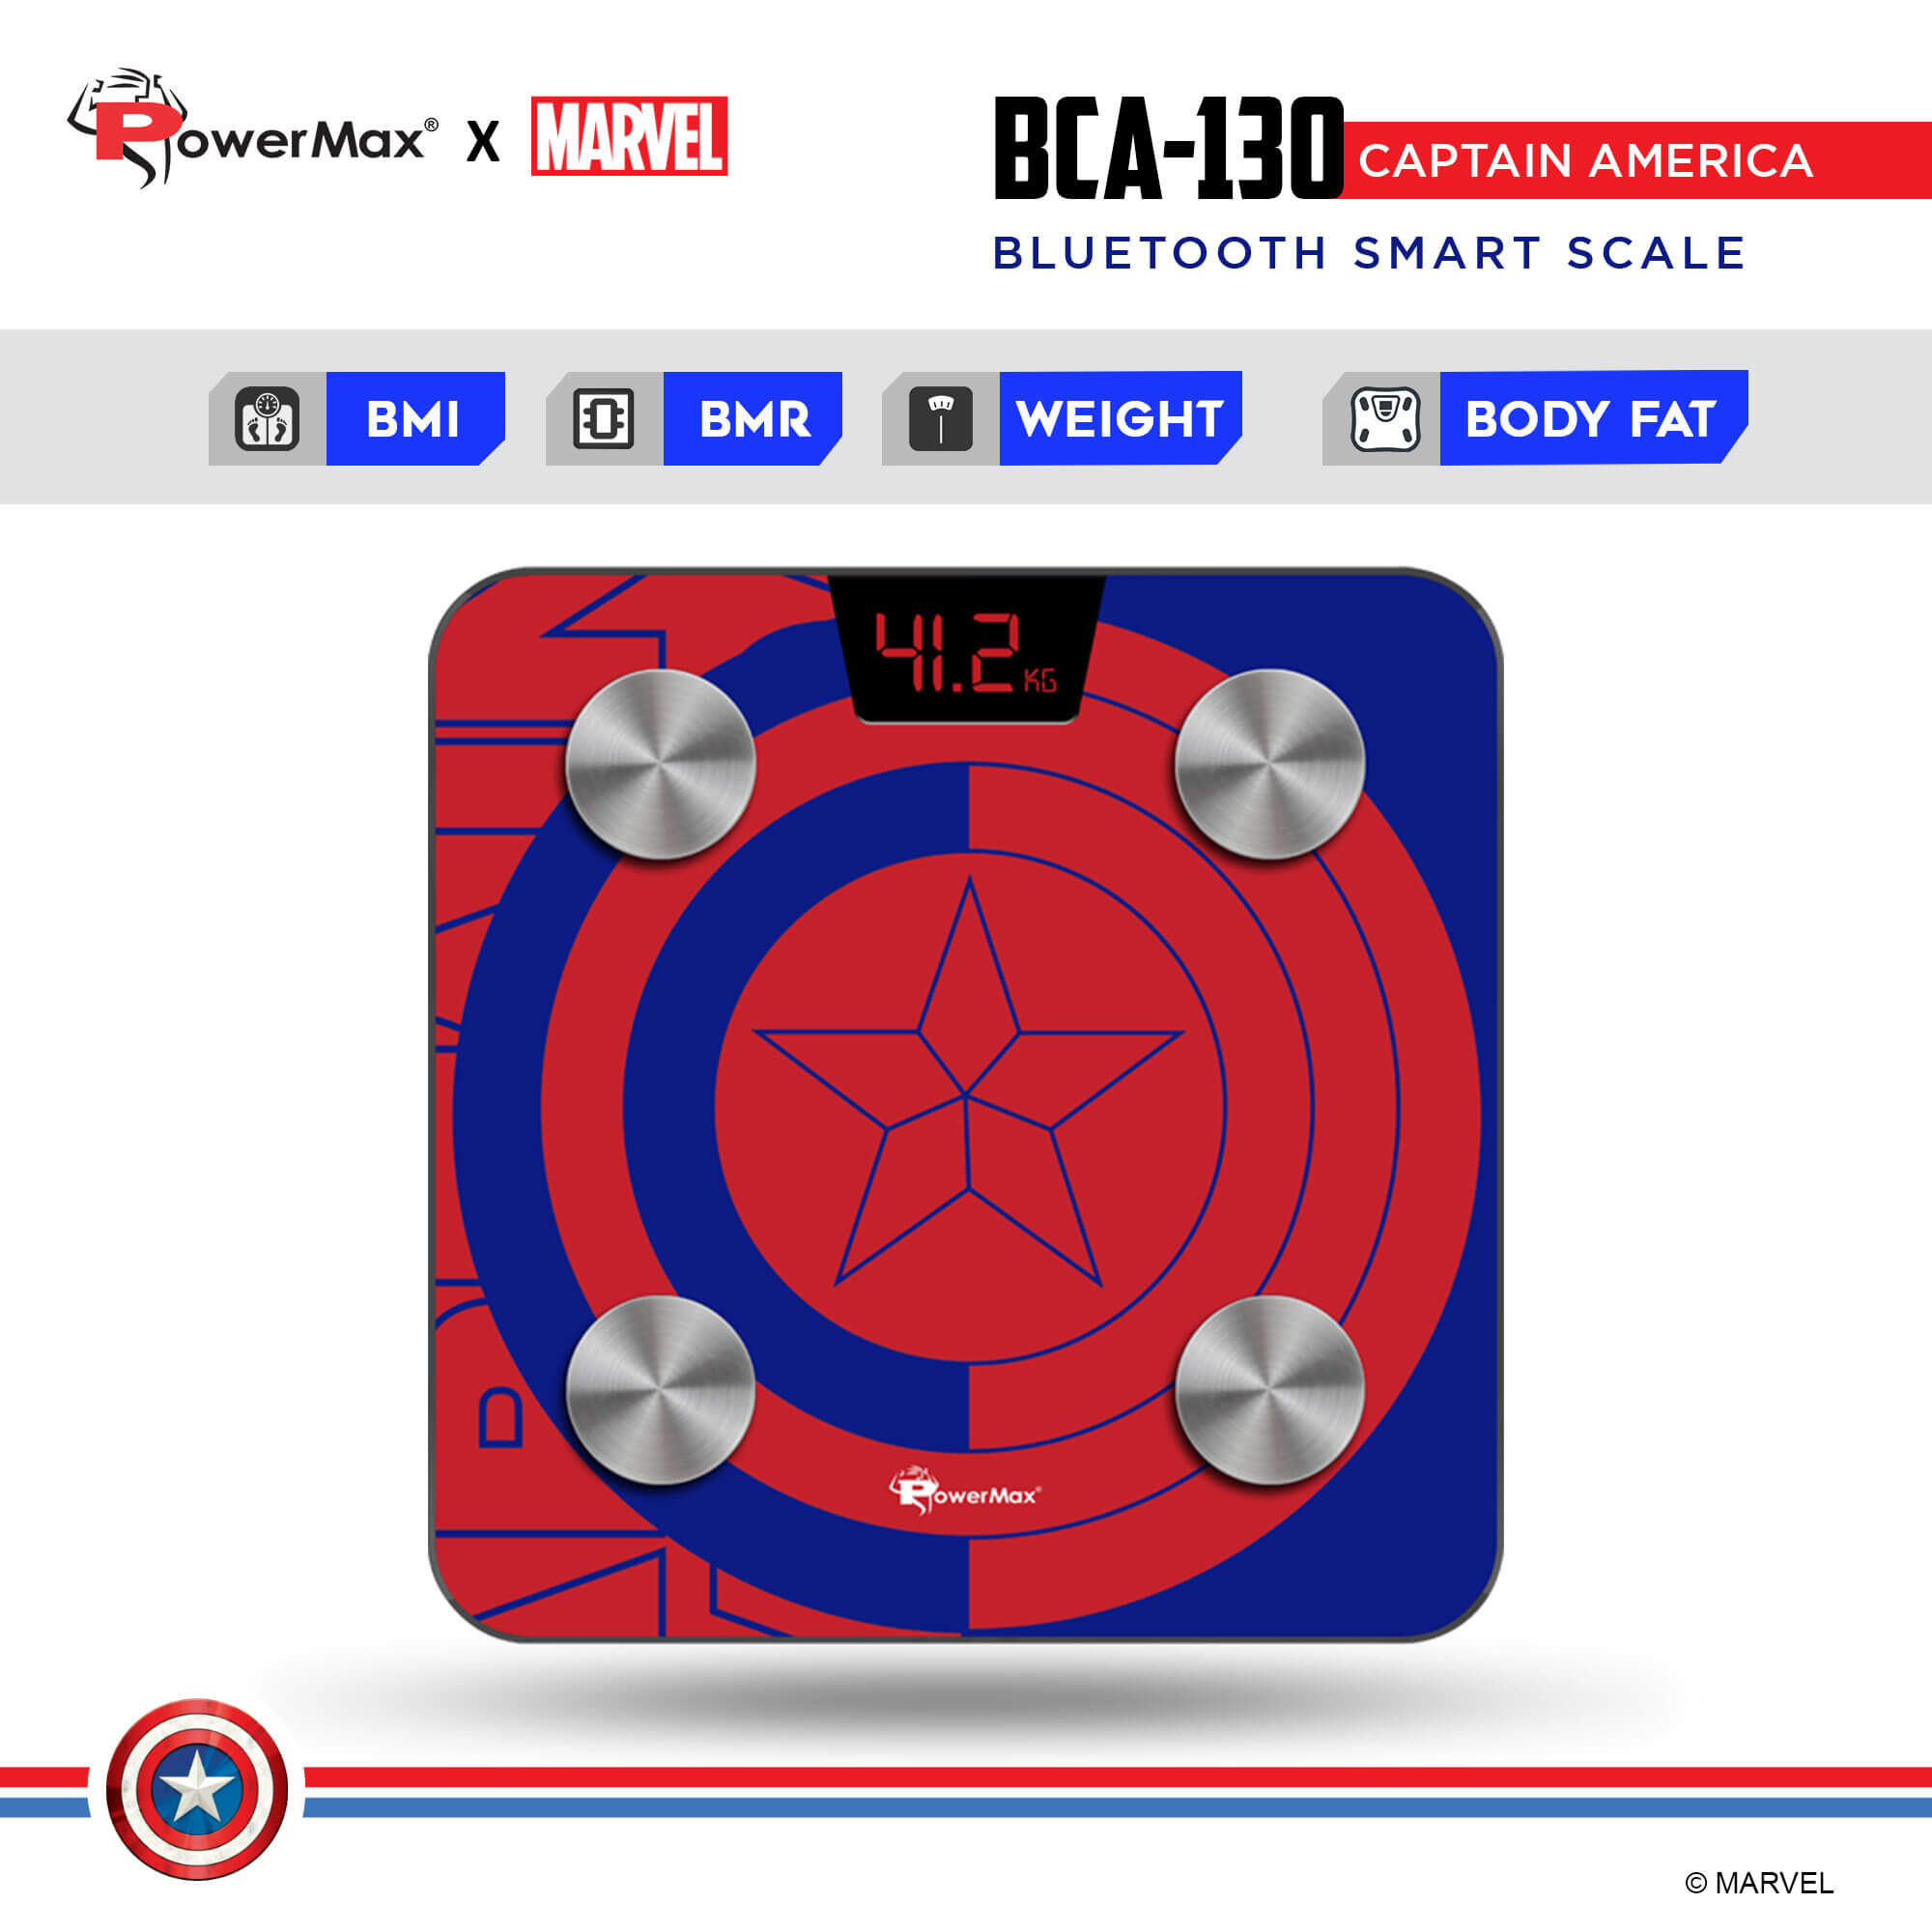 PowerMax x Marvel BCA-130 Marvel Edition Bluetooth Smart Scale